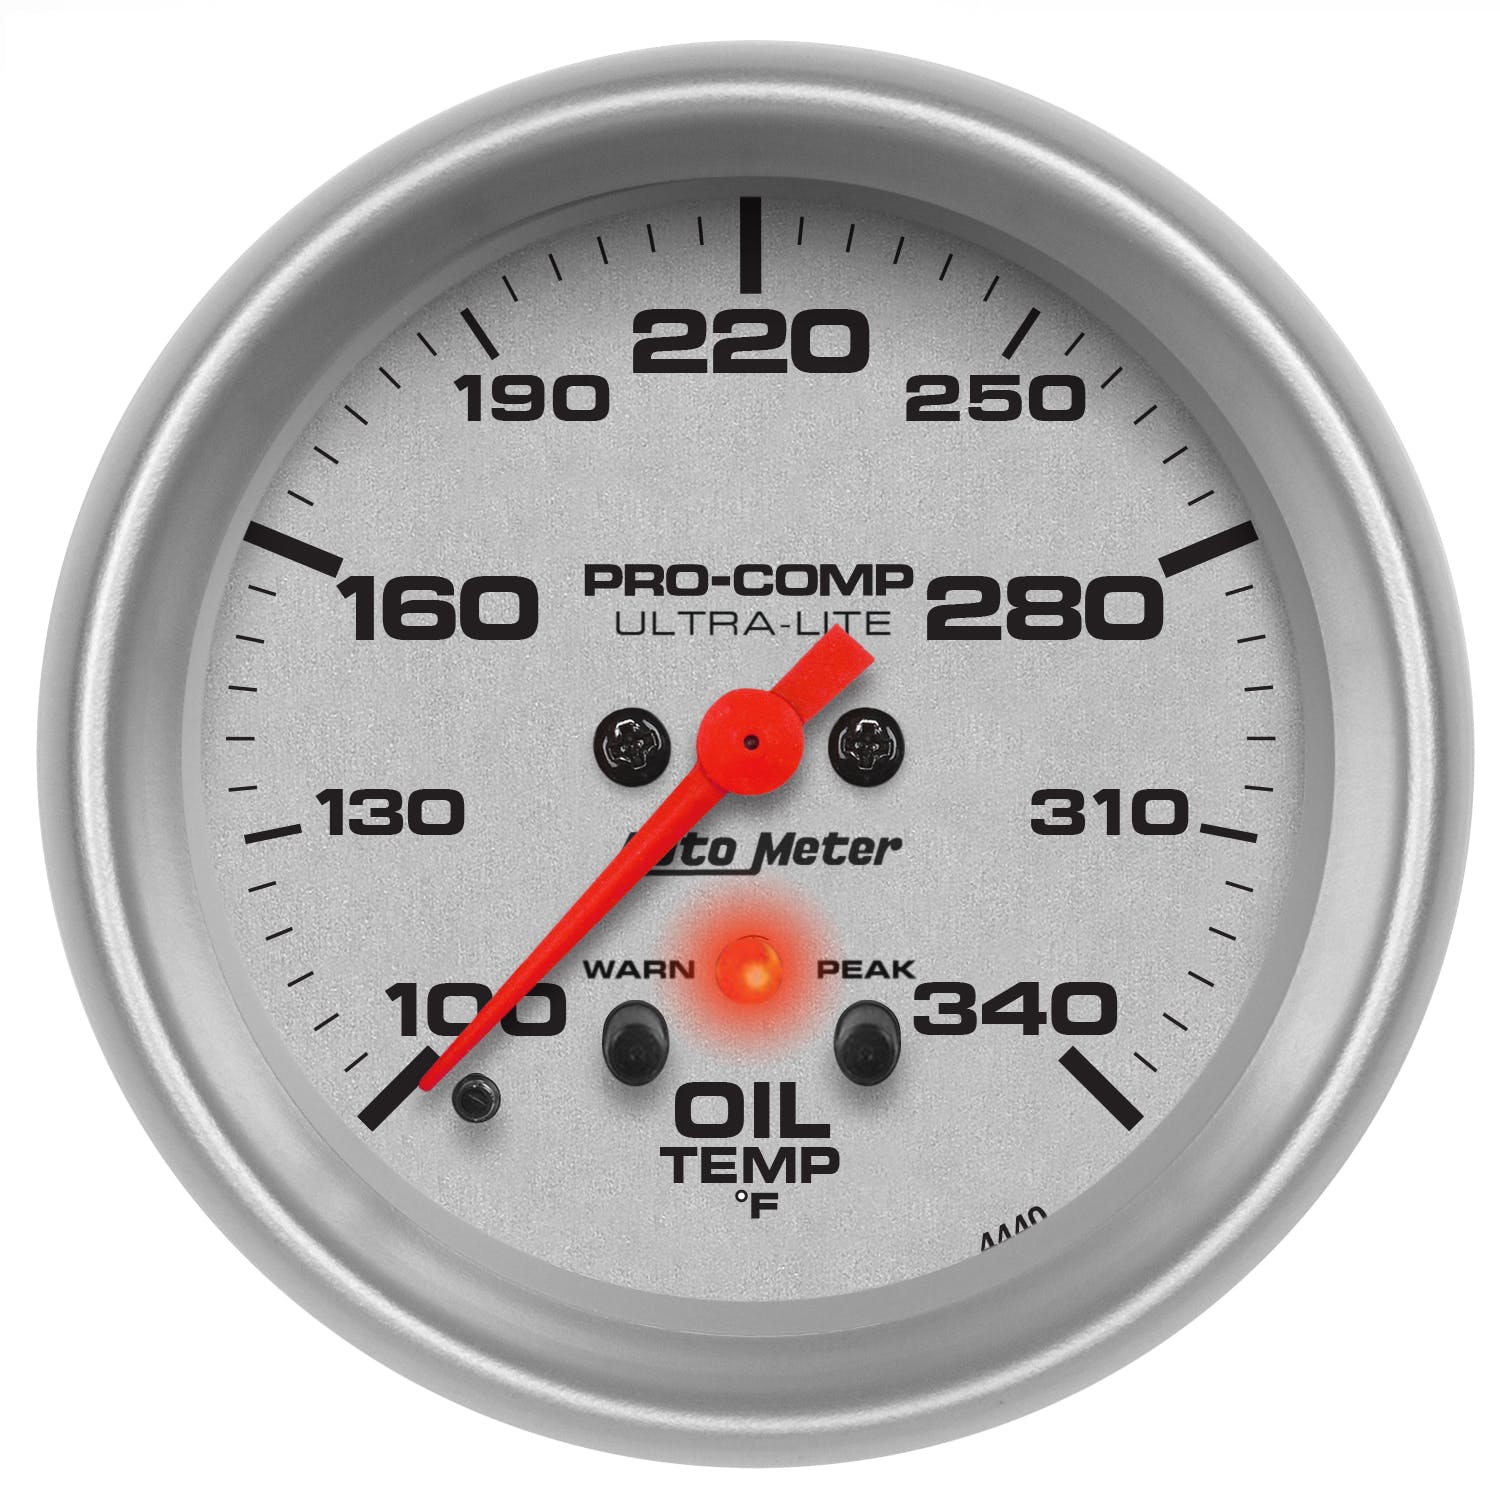 AutoMeter Products 4440 Ultra-Lite Electric Oil Temperature Gauge 2 5/8 in. 100 - 340 Deg. F w/Peak